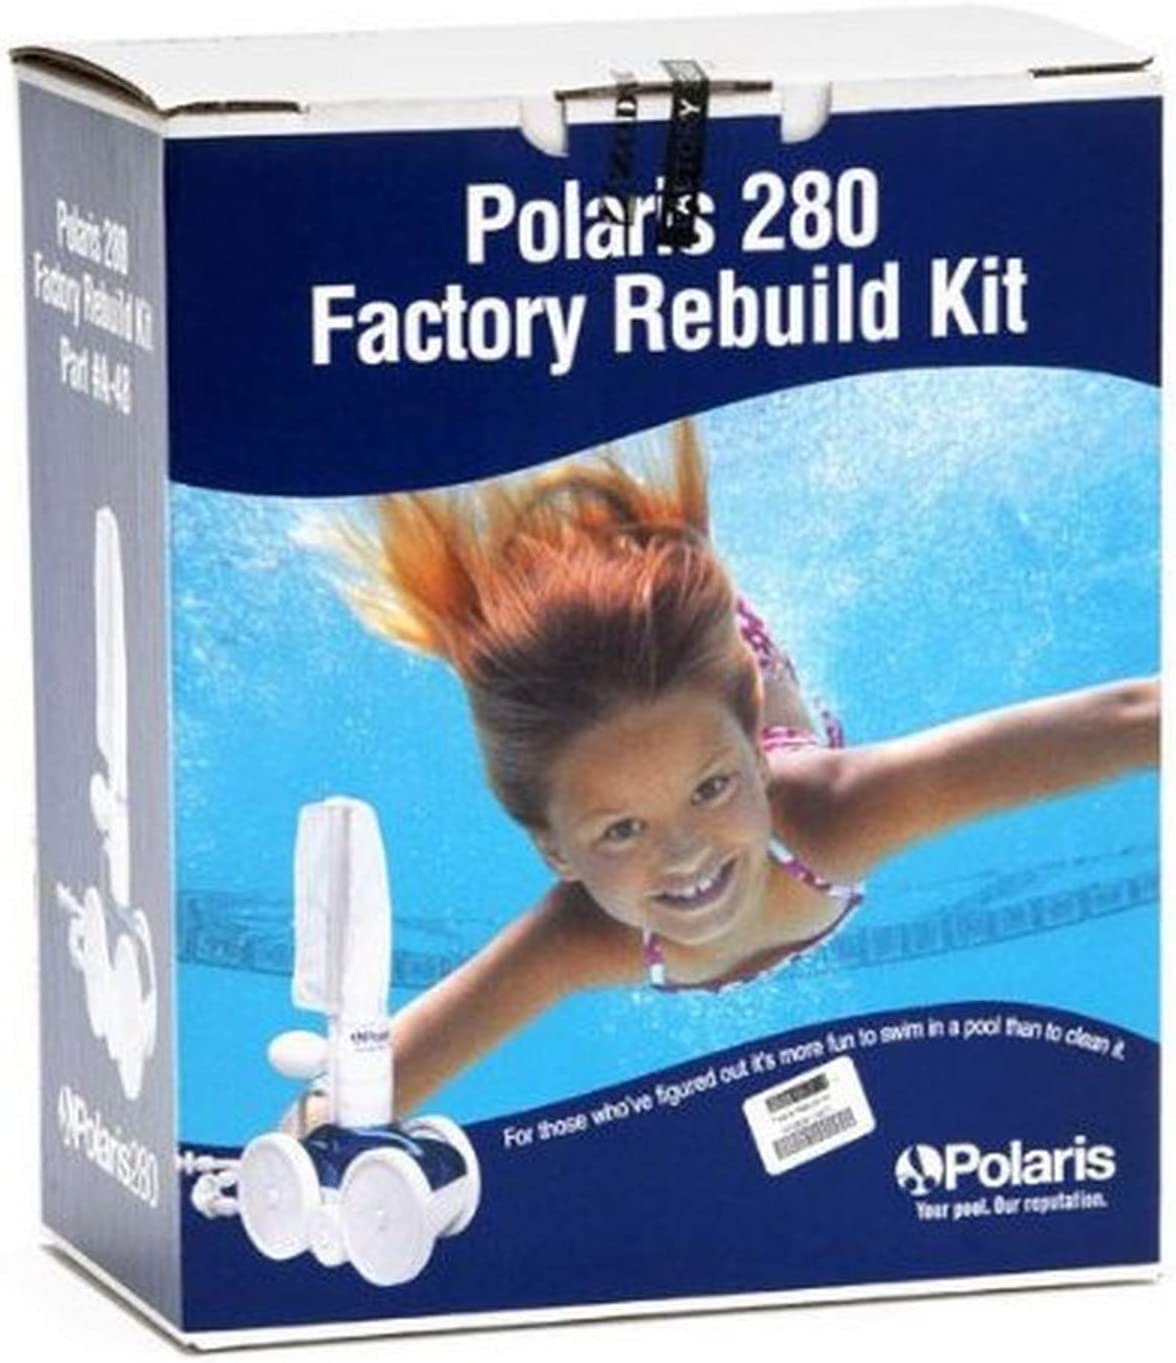  FibroPool Polaris 280 Rebuild Kit - Includes Complete